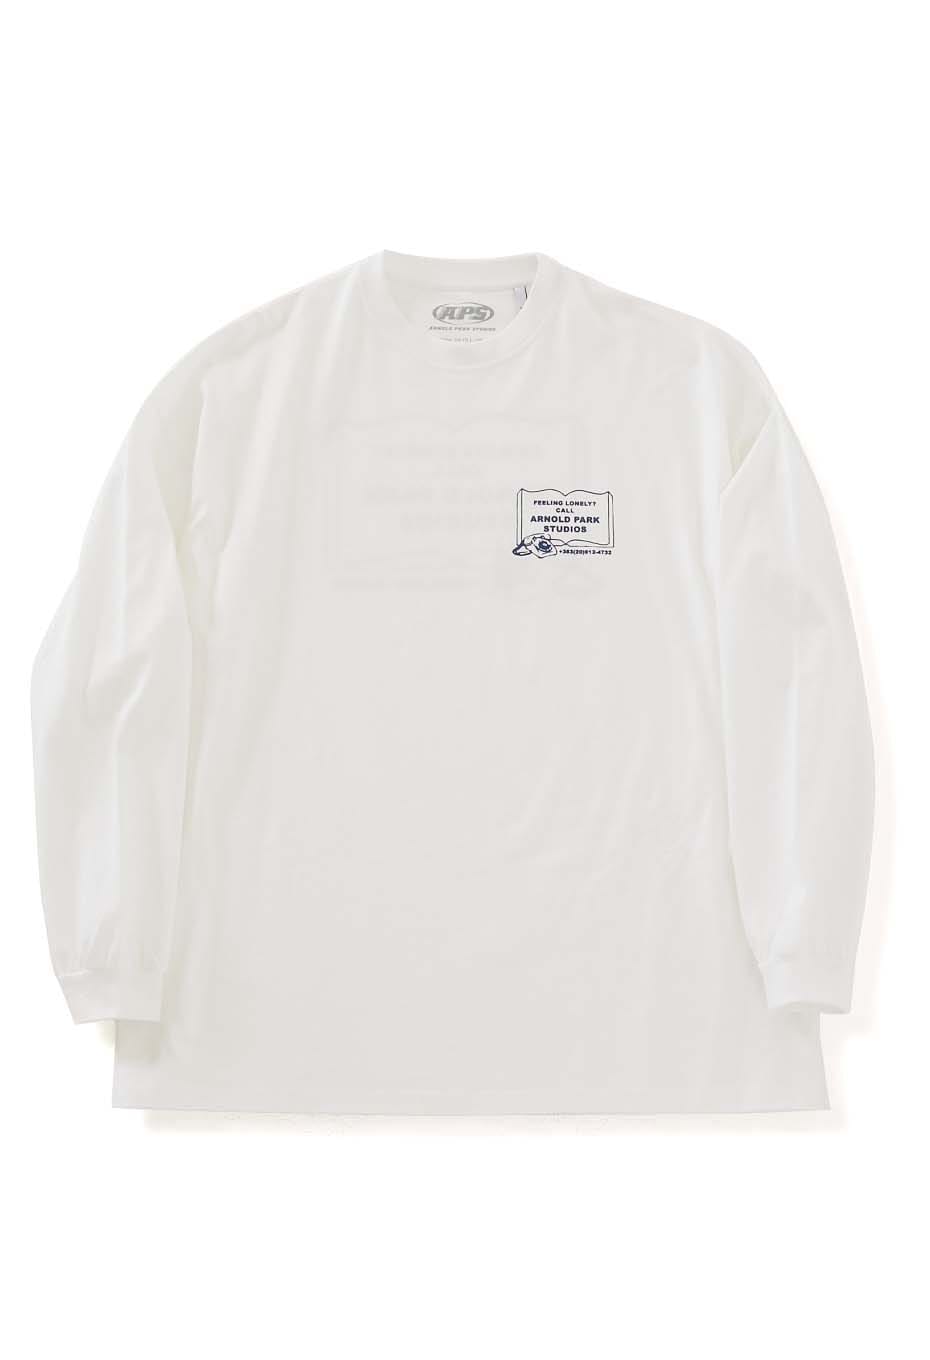 ARNOLD PARK STUDIOS Cole APS Long Sleeve T-shirts (EXCLUSIVE PRINT)